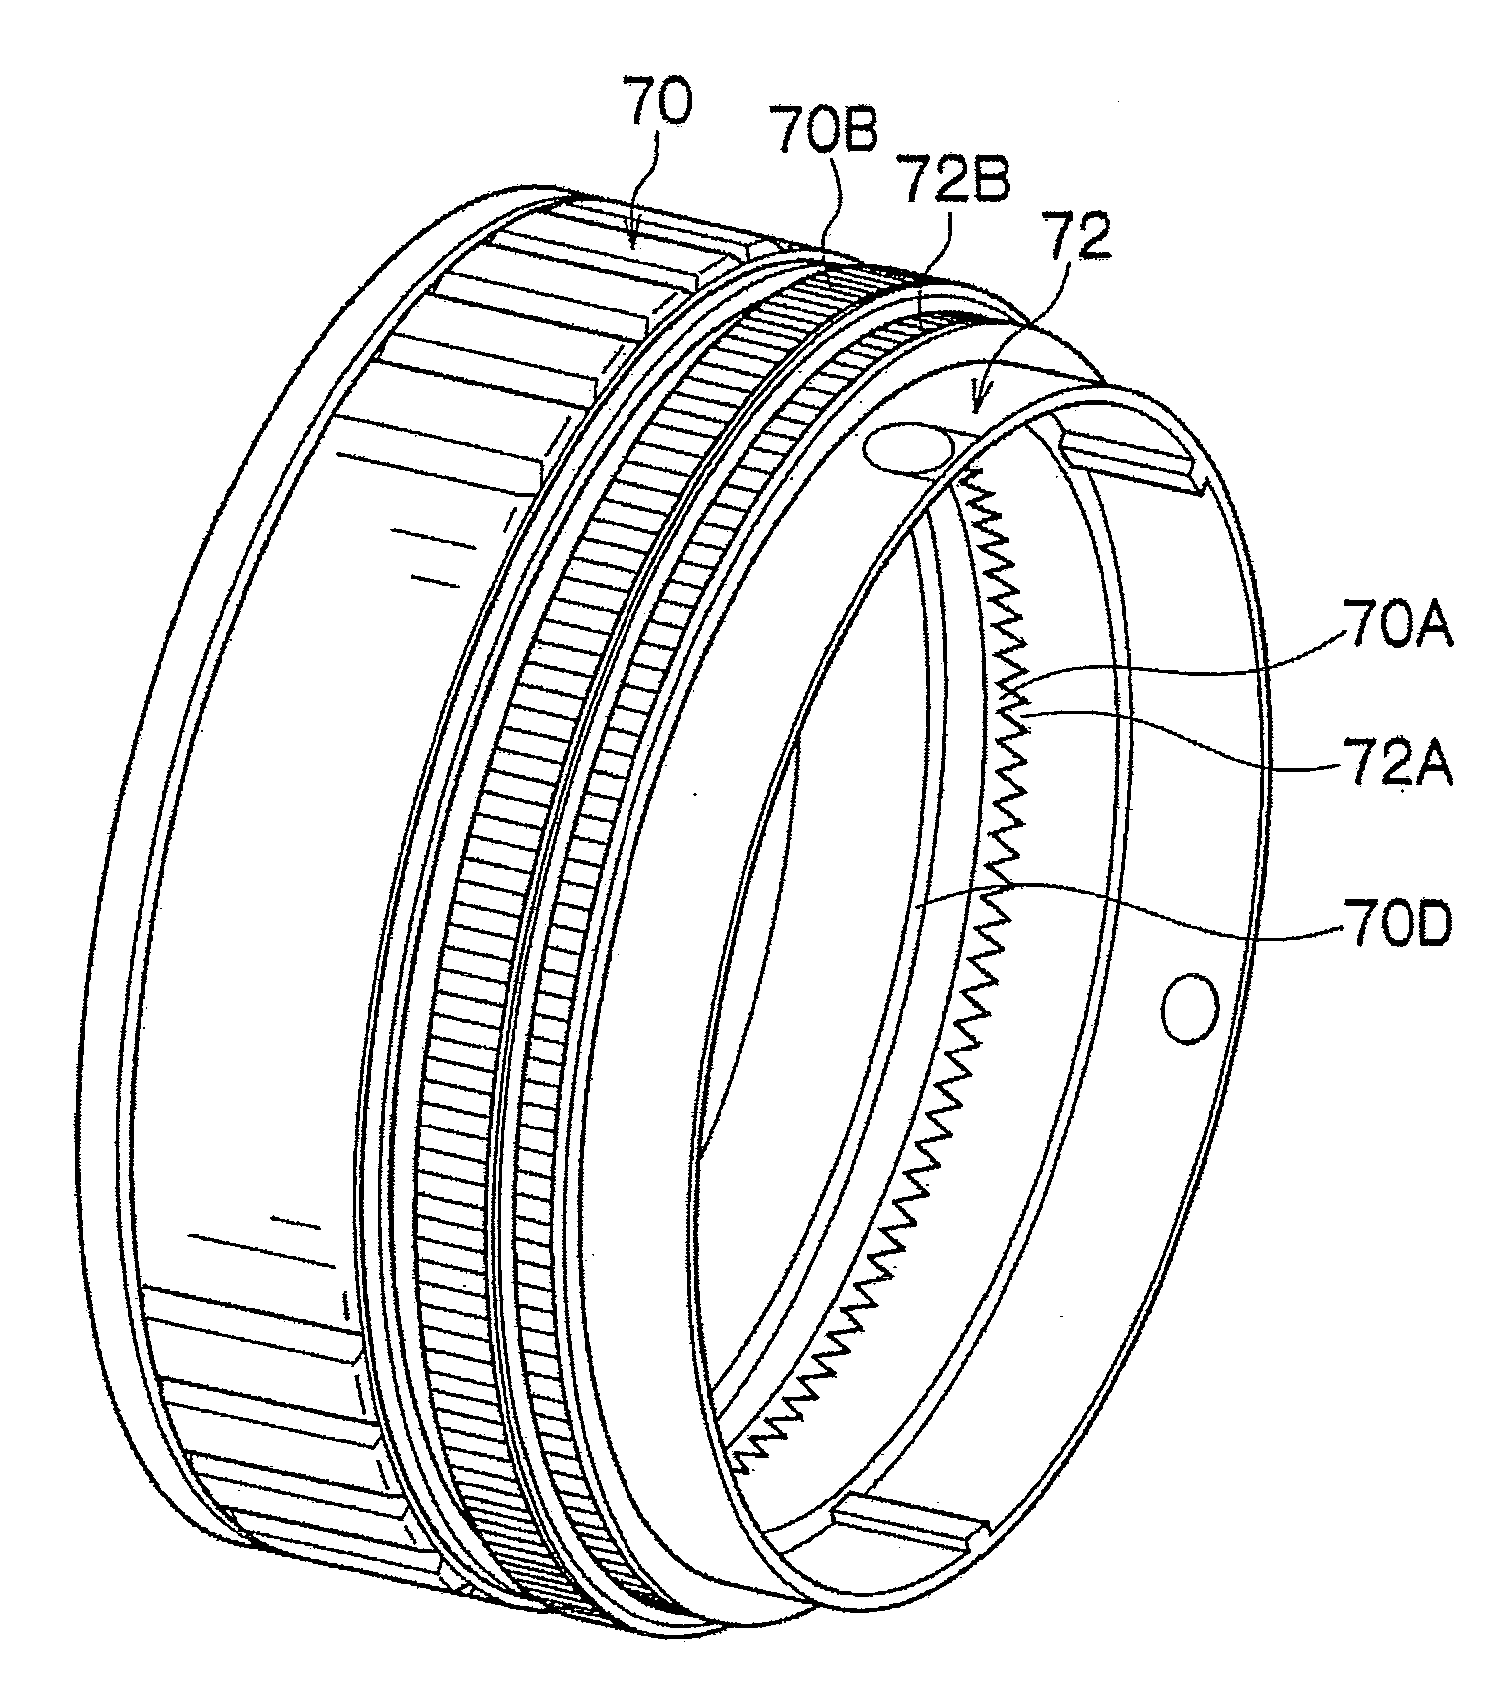 Lens device